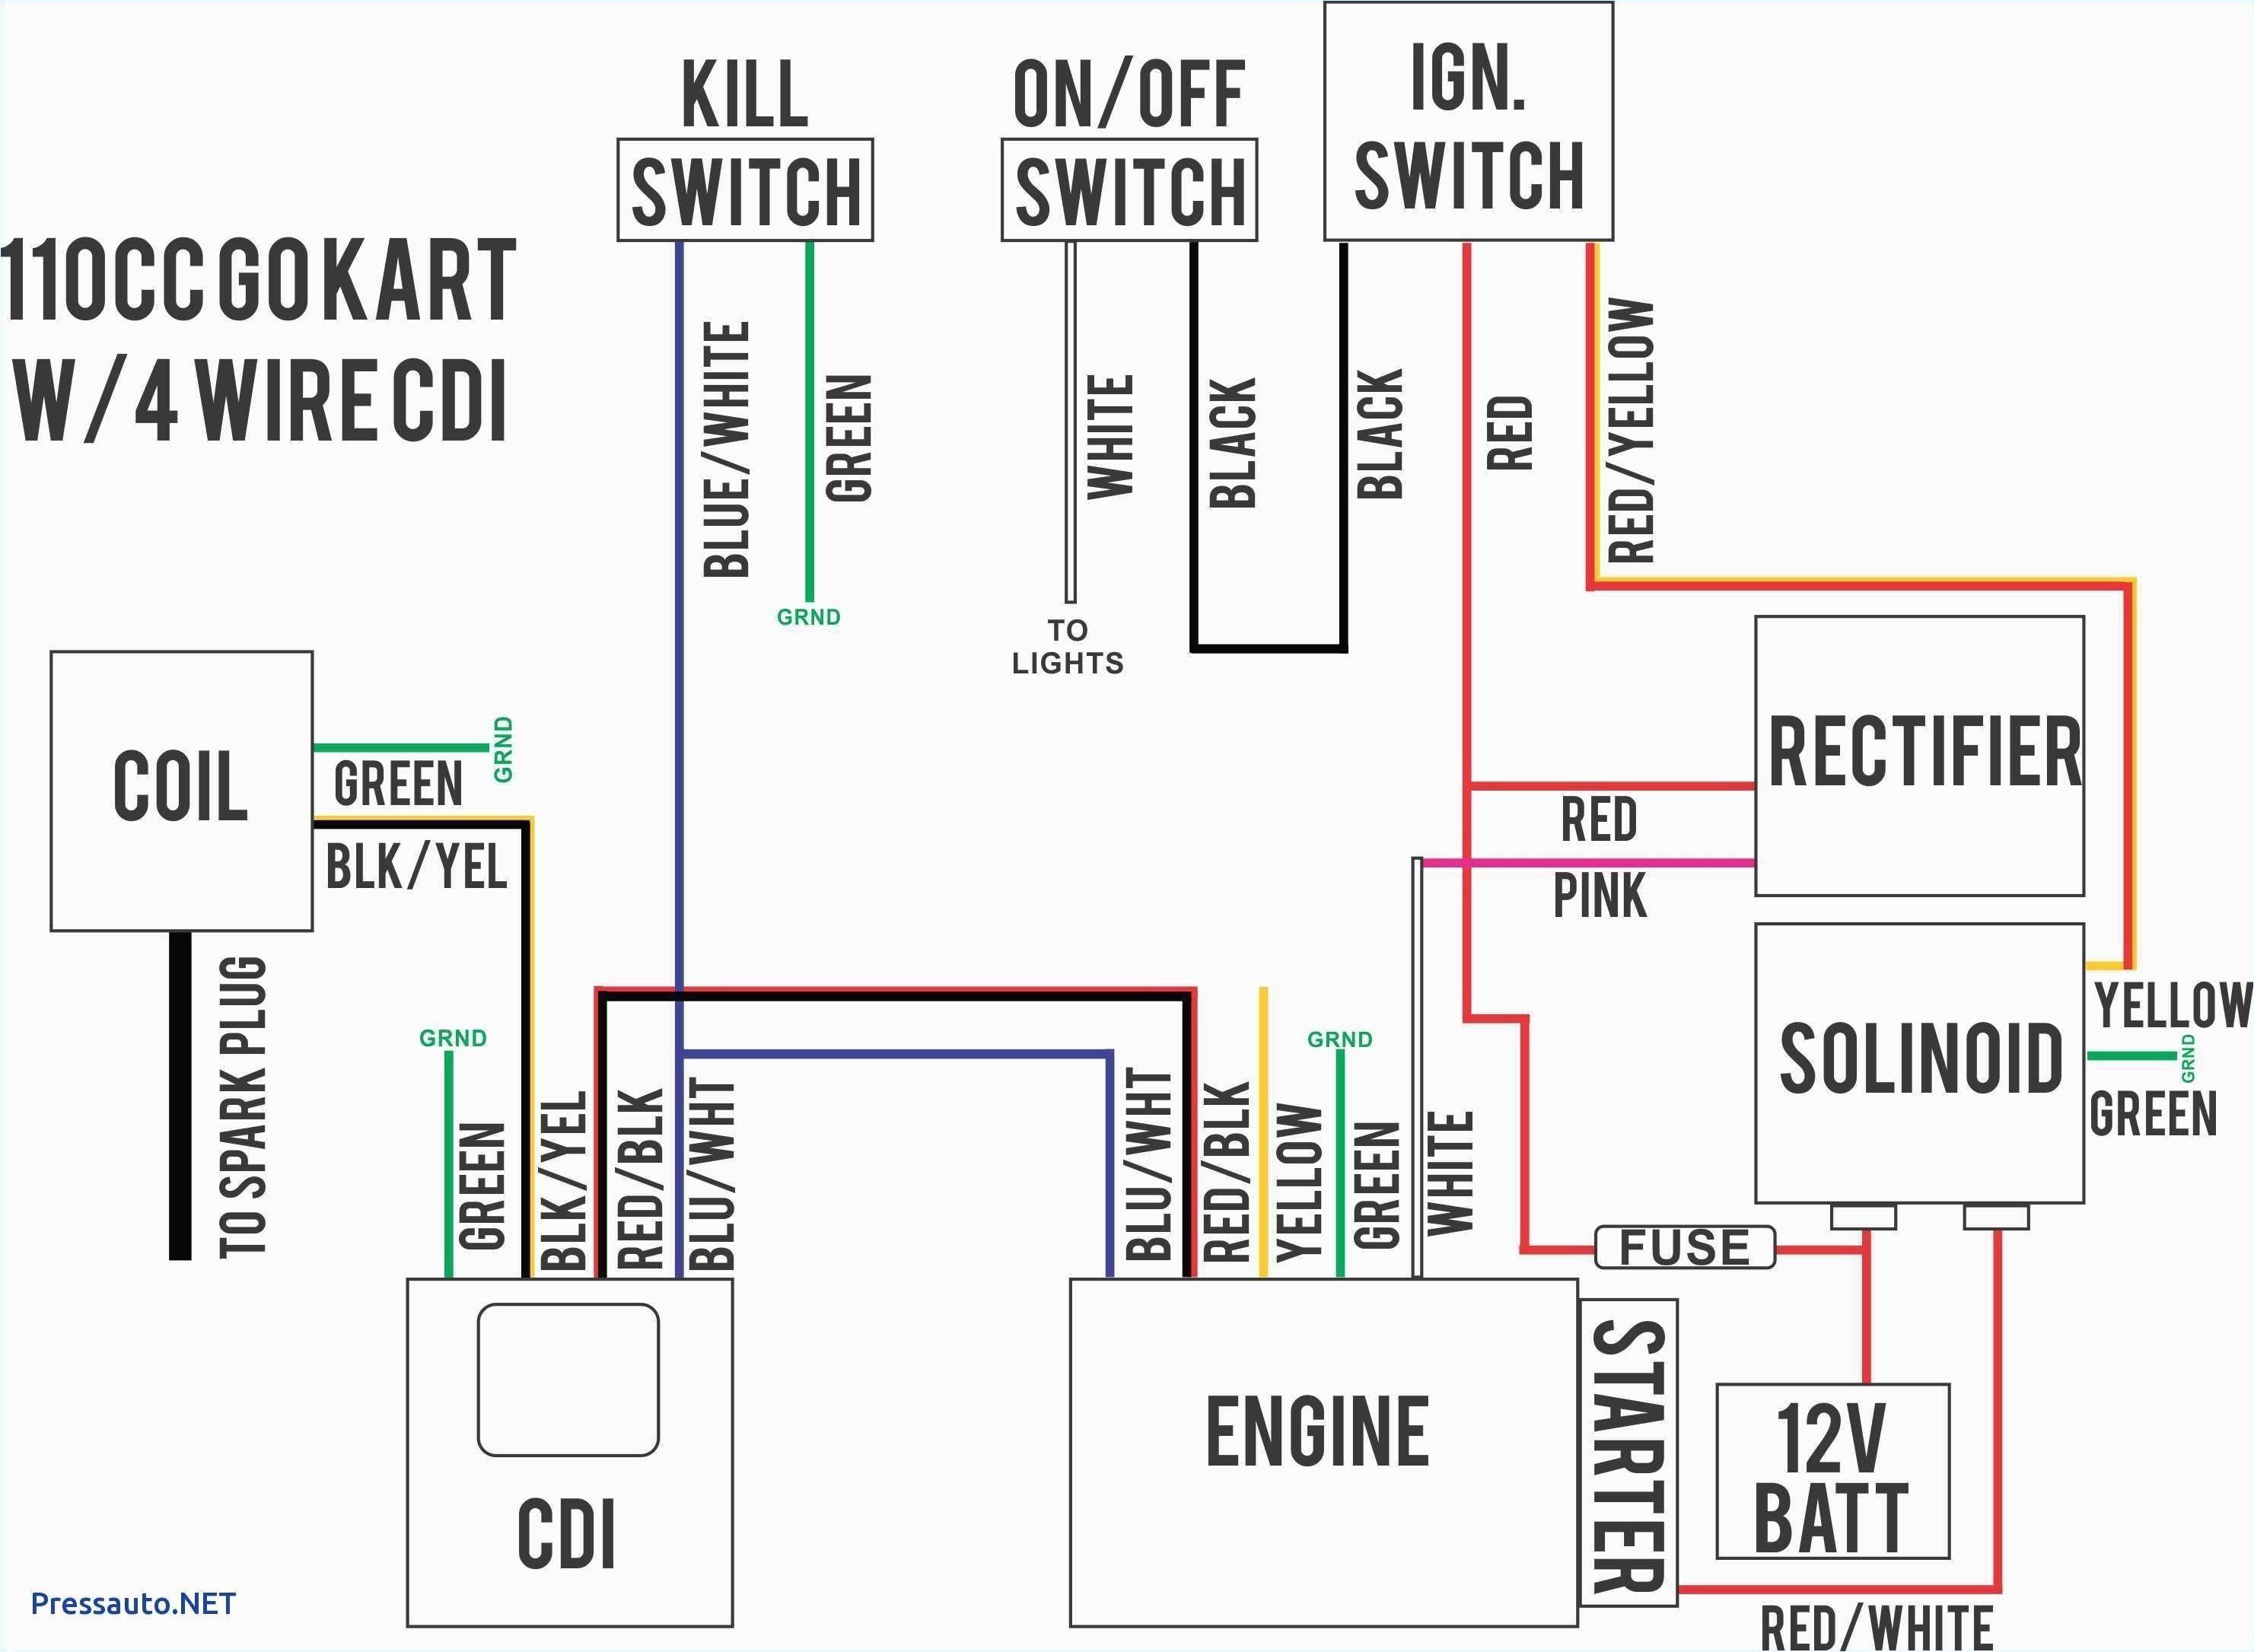 wiring diagram honda c70